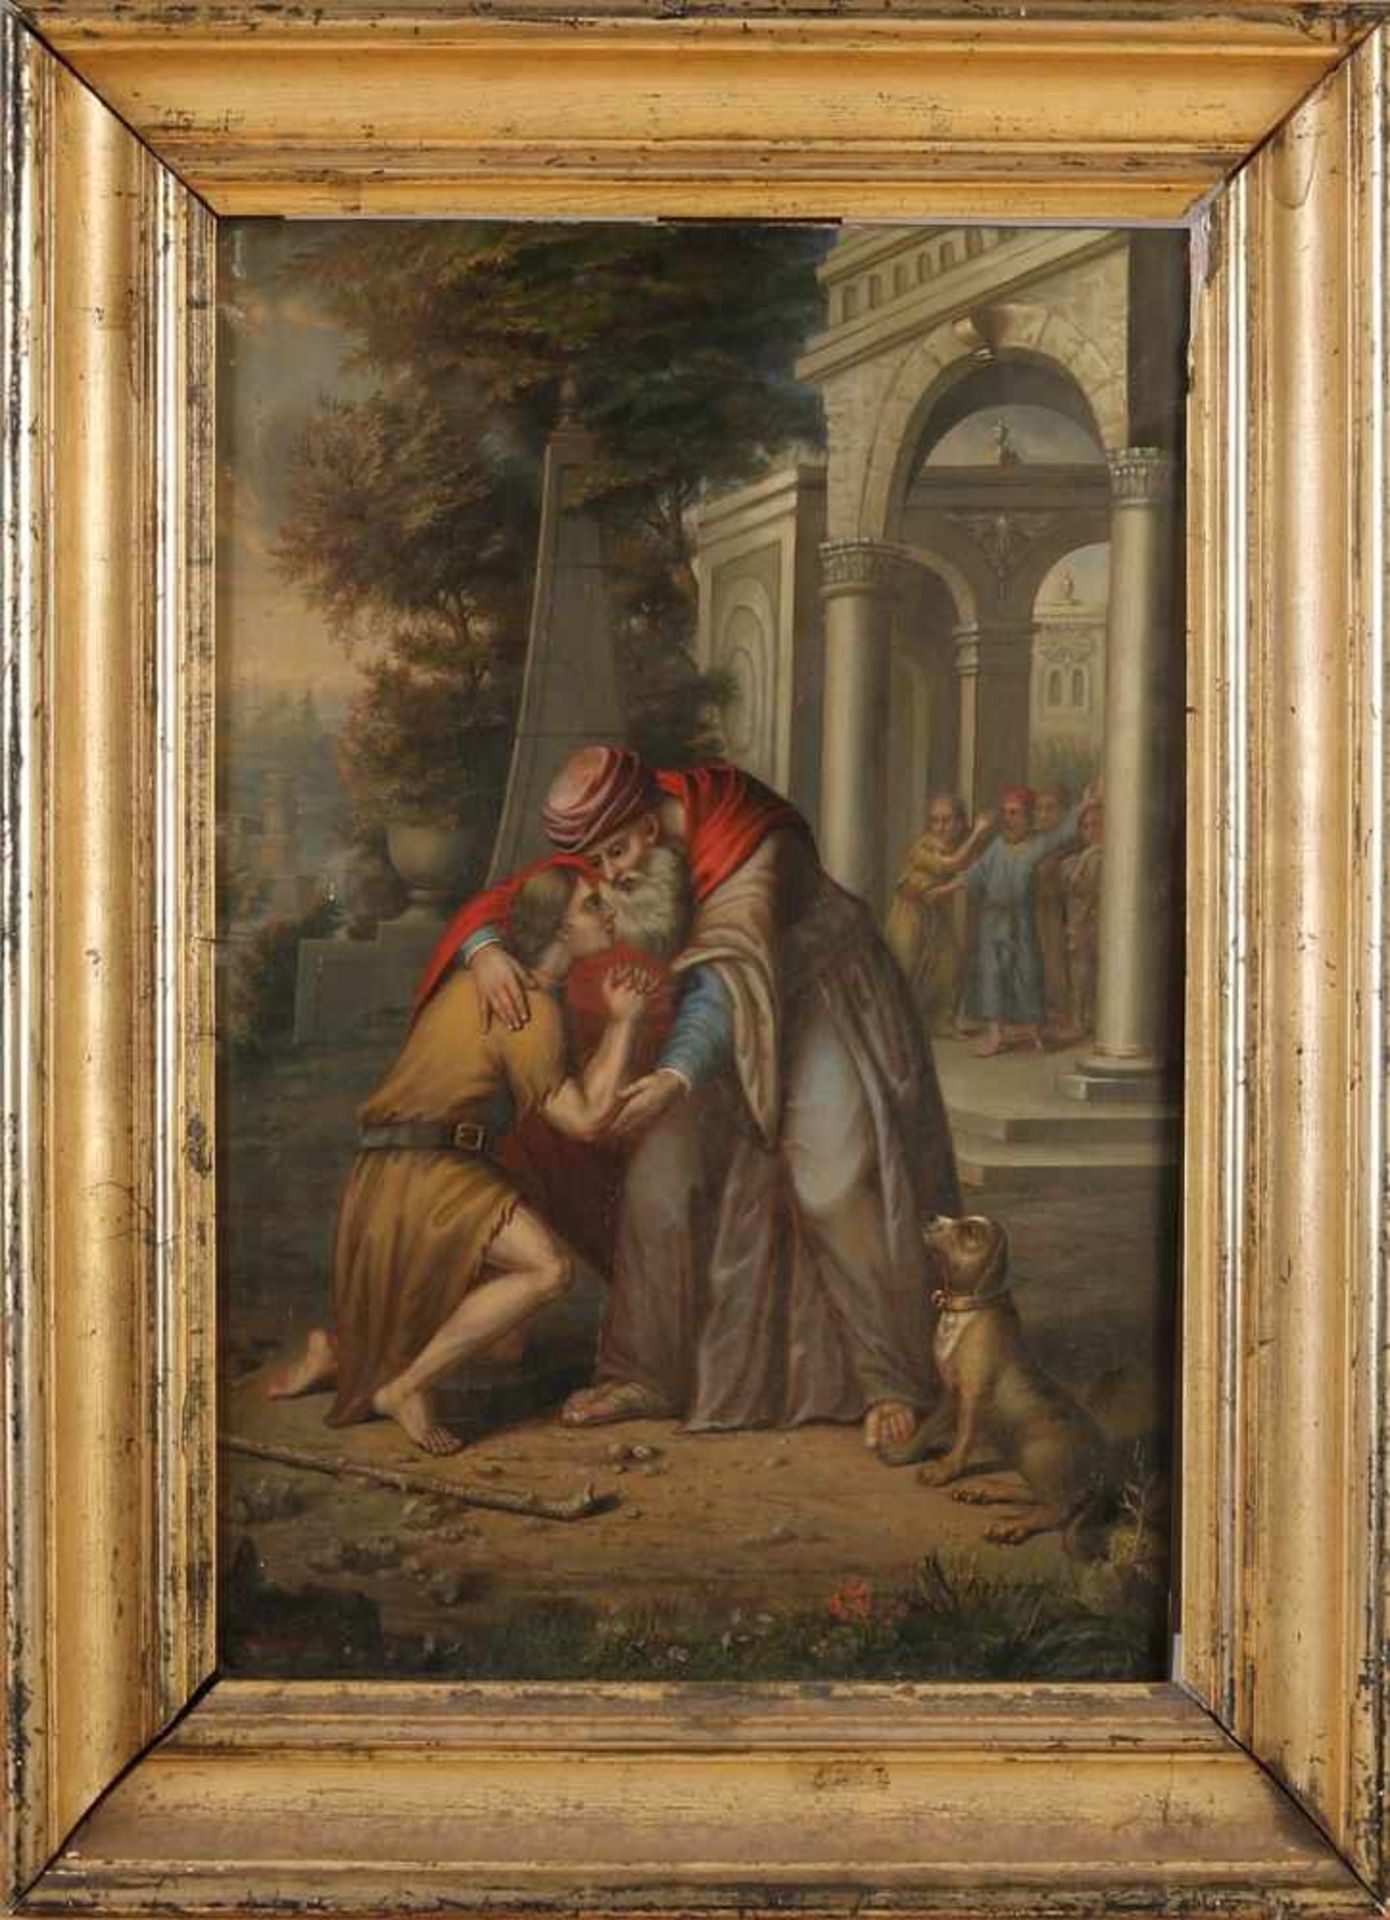 G. Hattink Fecit 1880. performance with biblical figures. Oil paint on panel. Size: 43 x H, B 30 cm.